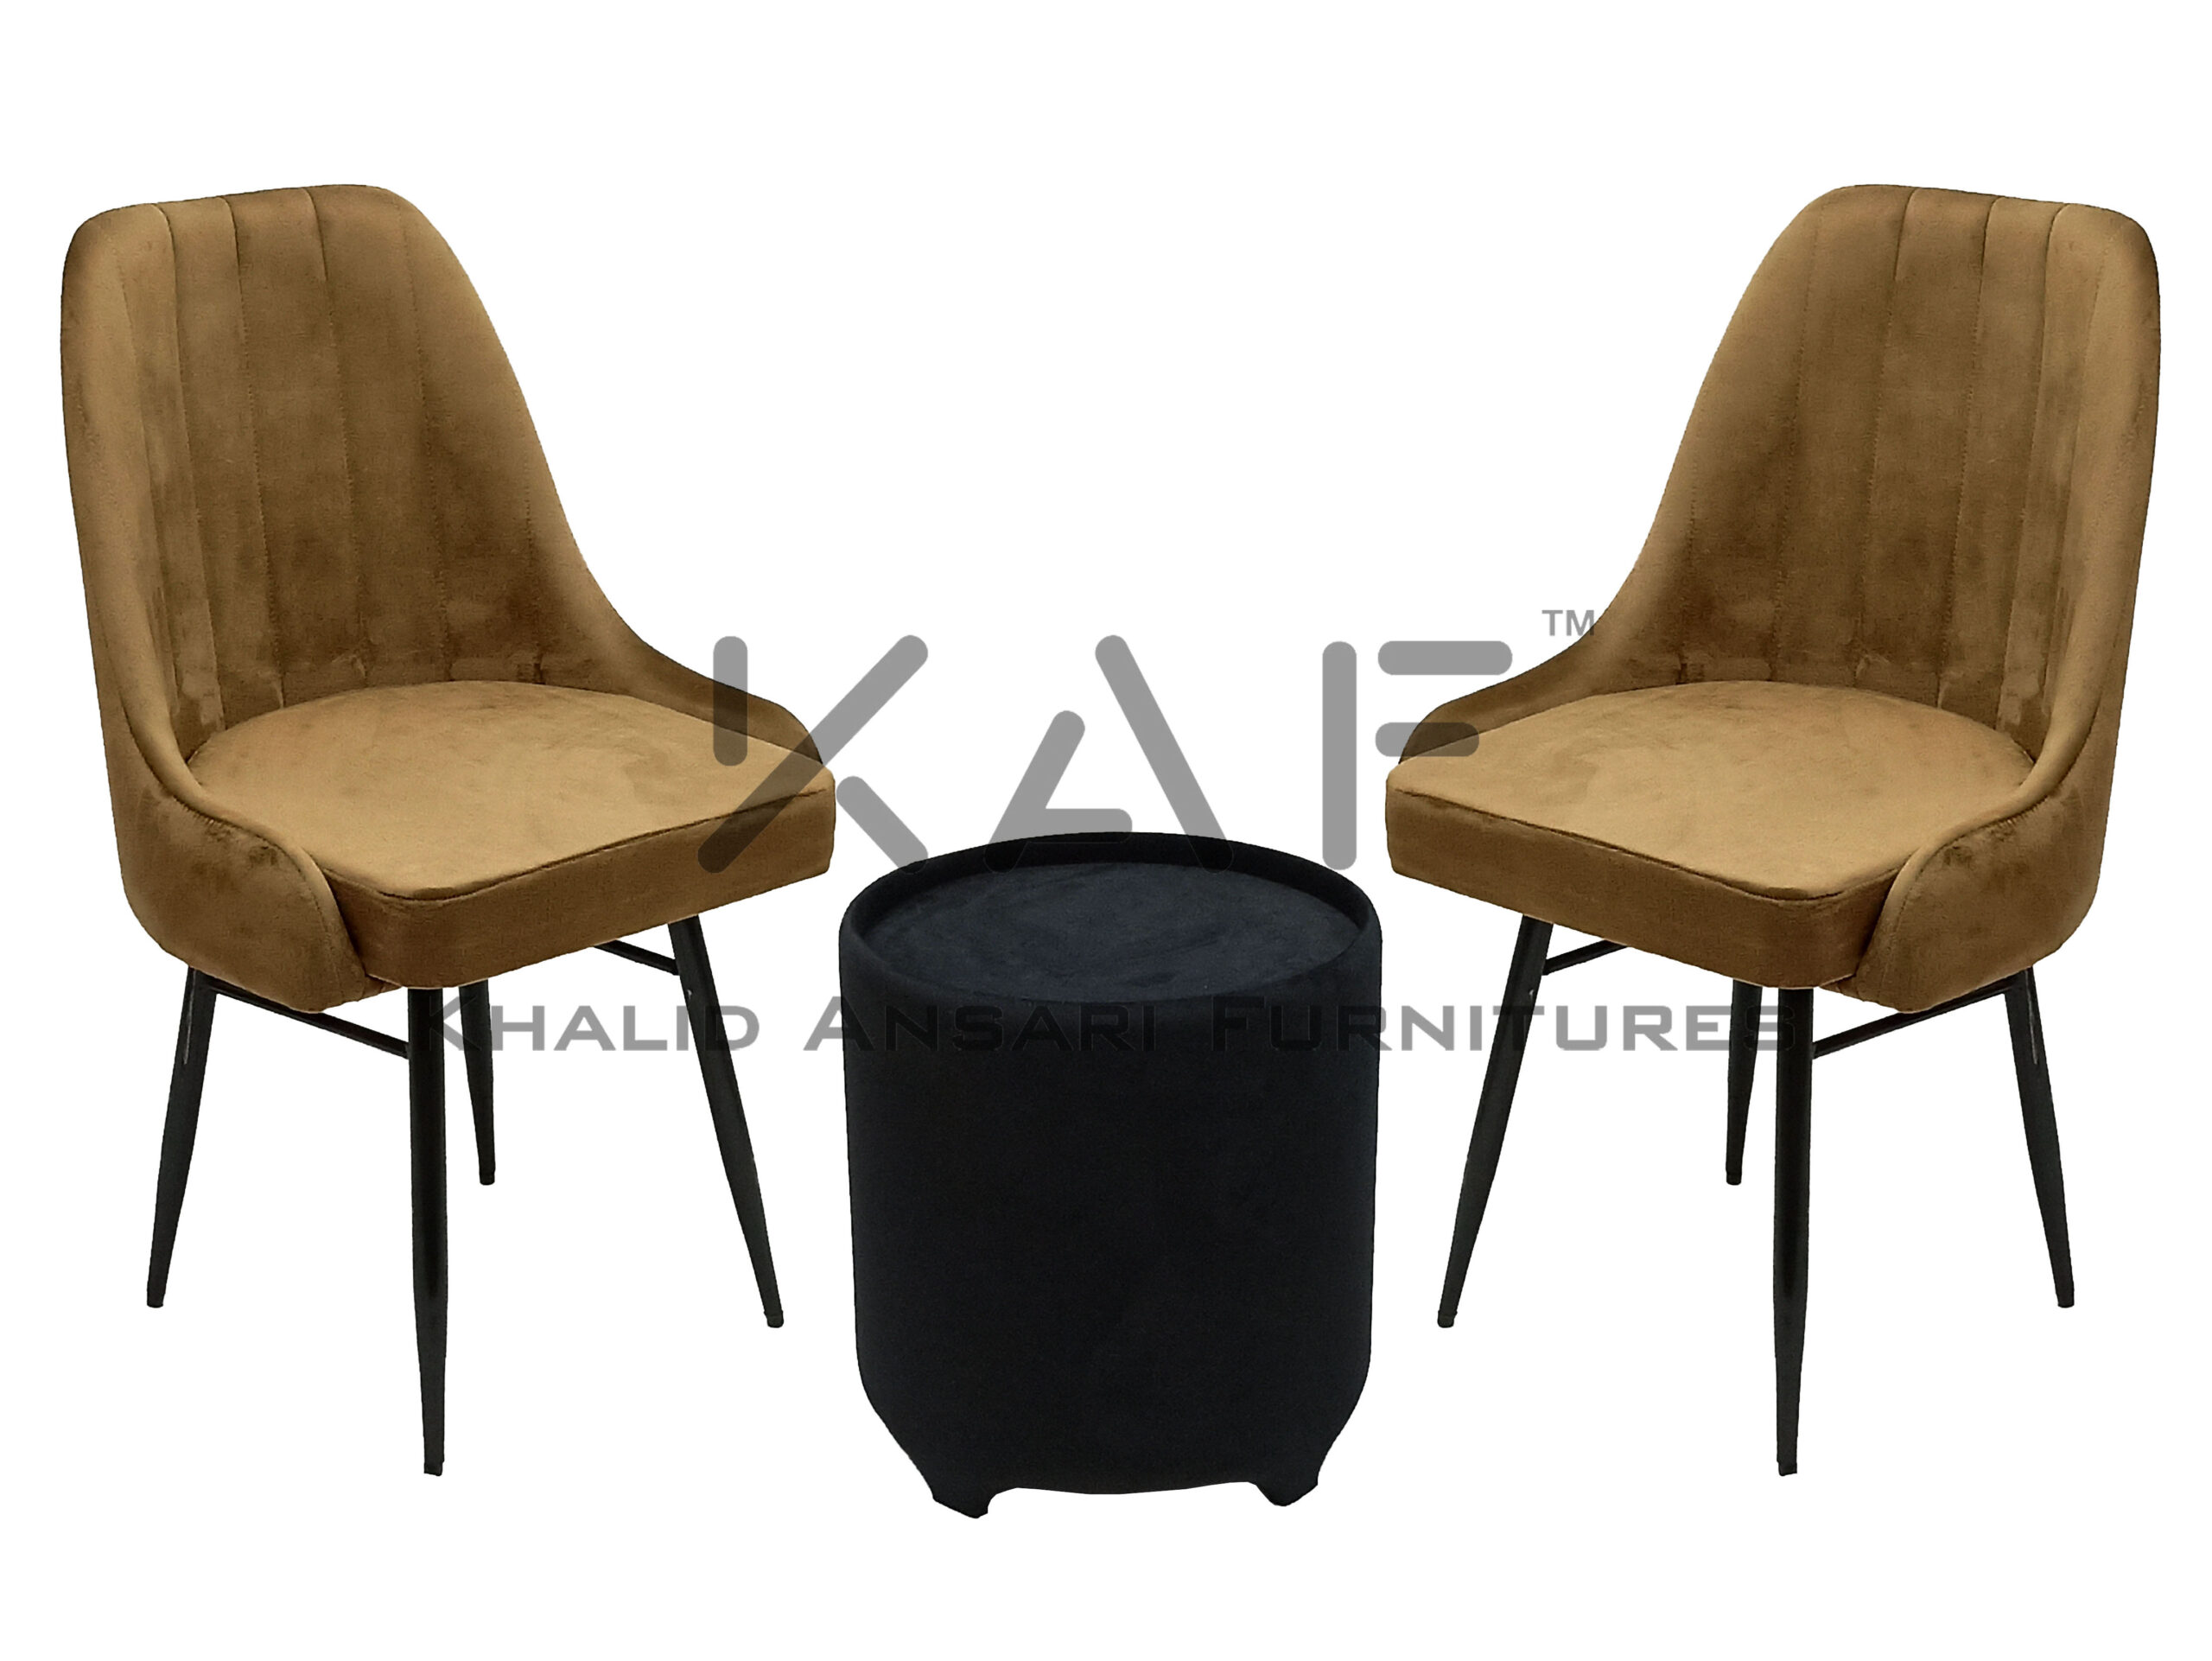 Bed Room Premium Chair High Back Arm Camel Brown Velvet set with Black Velvet Tea Table - 2 Chairs + 1 Table